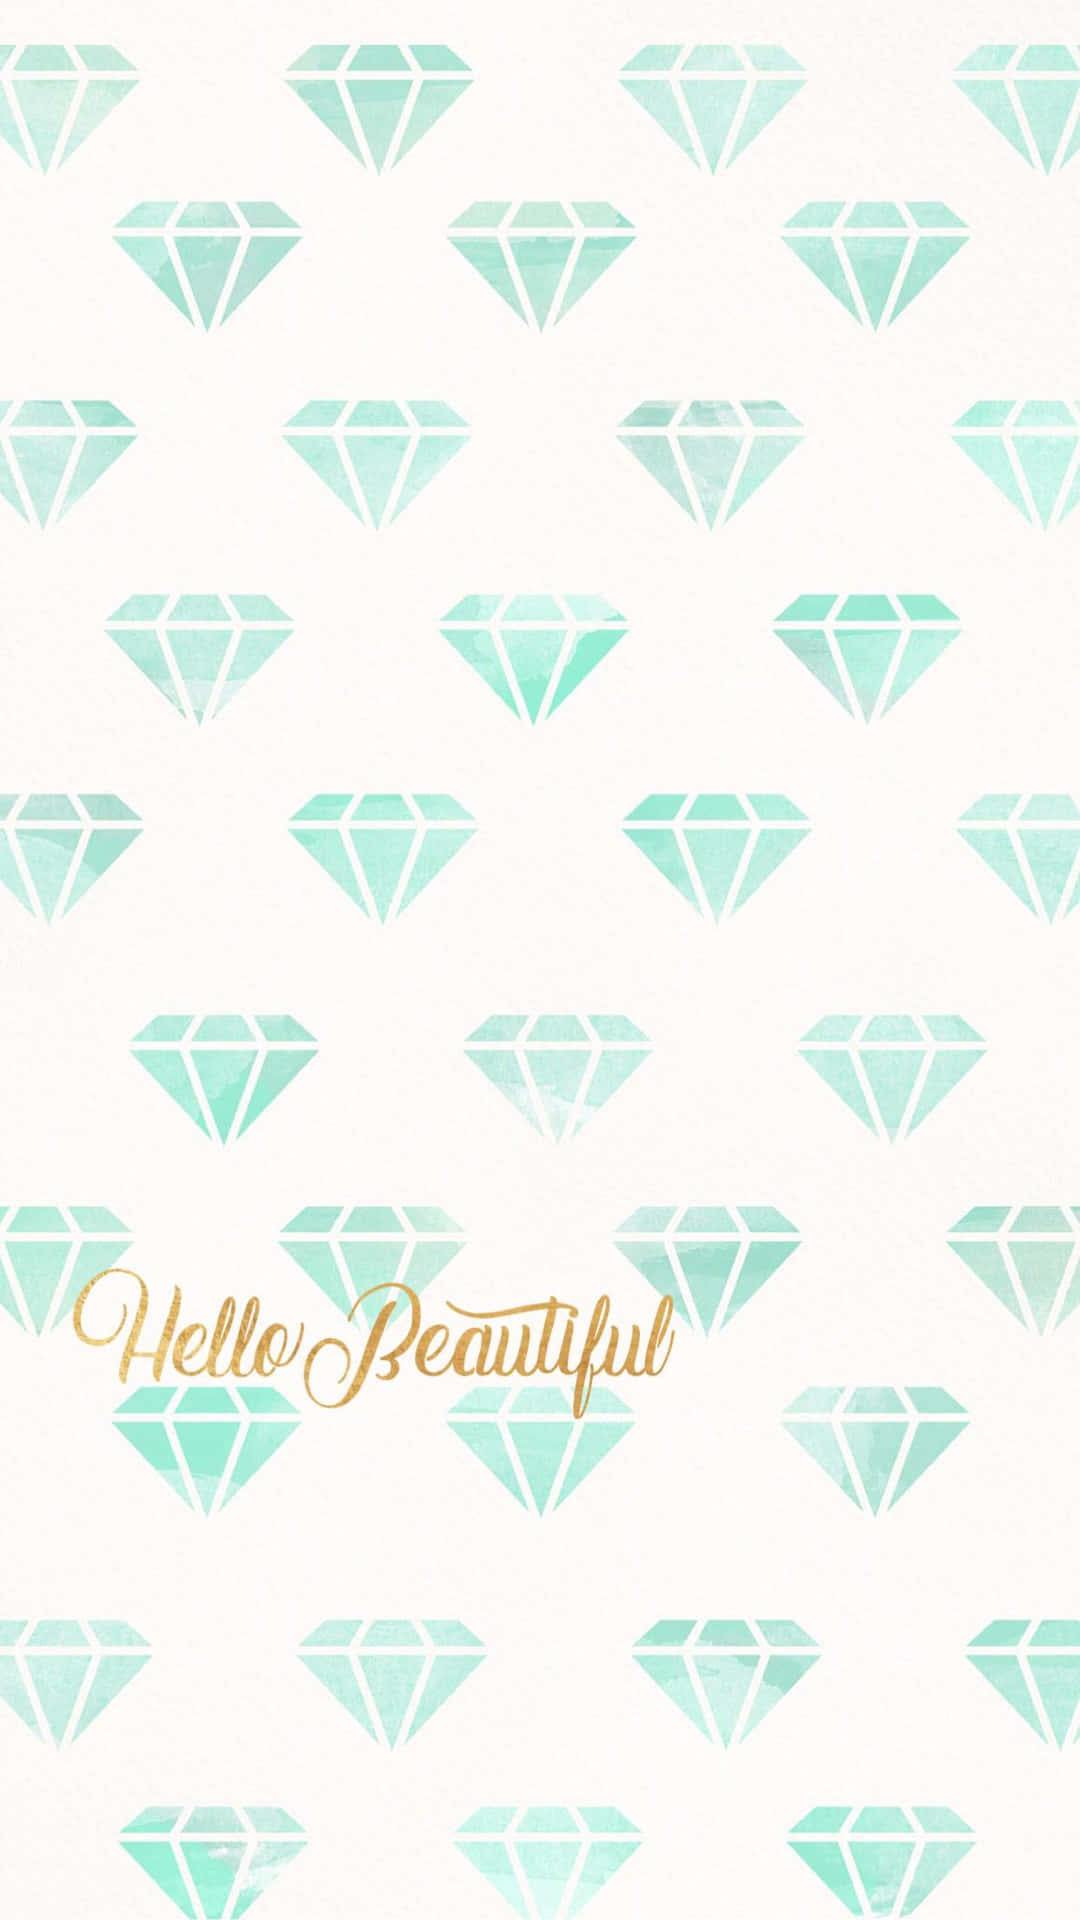 Hello Beautiful Cute iPhone Teal Diamond Patterns Wallpaper